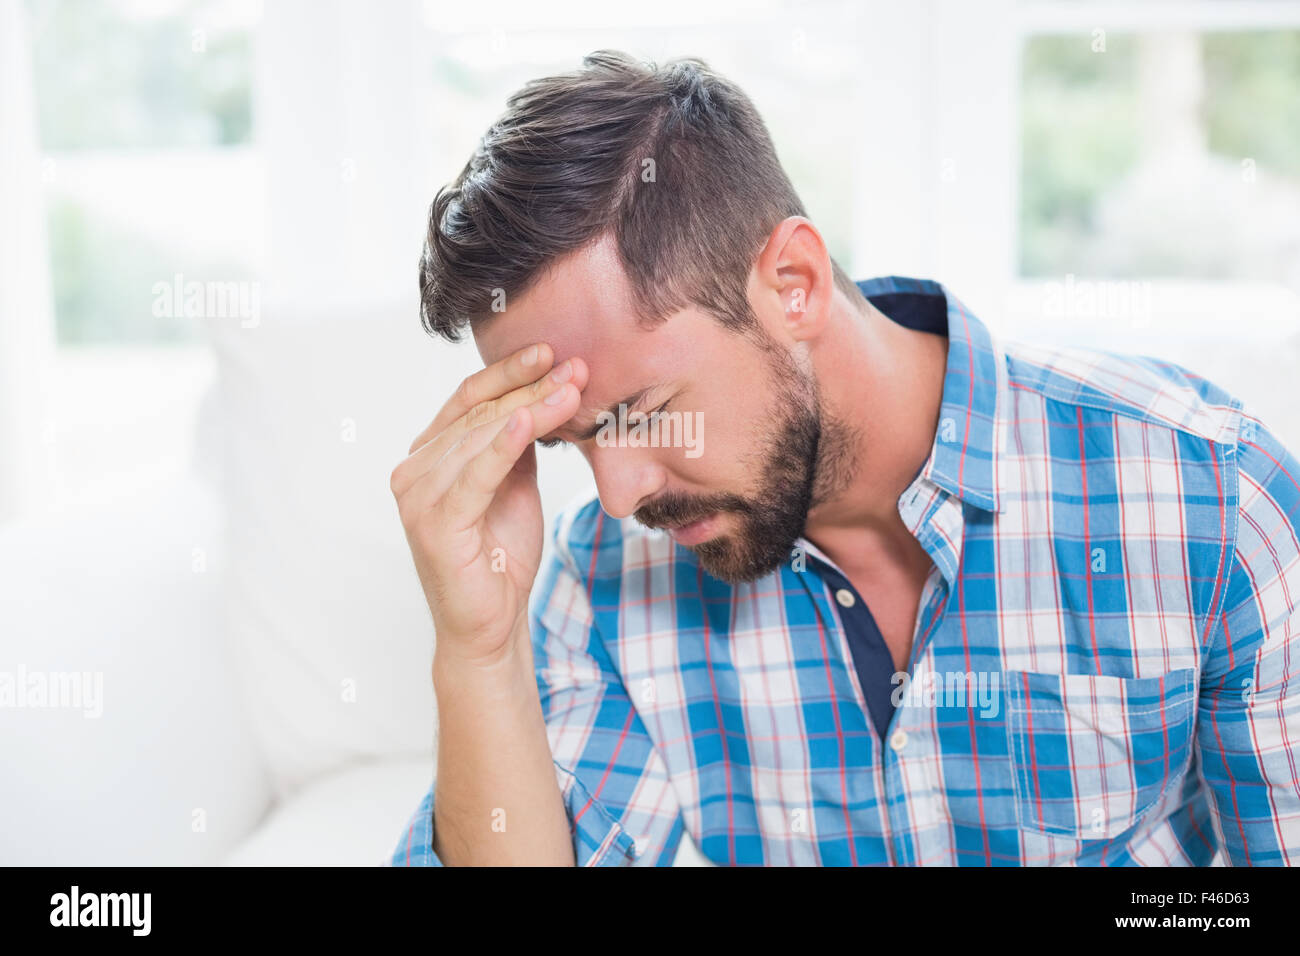 Ill man suffering from headache Stock Photo